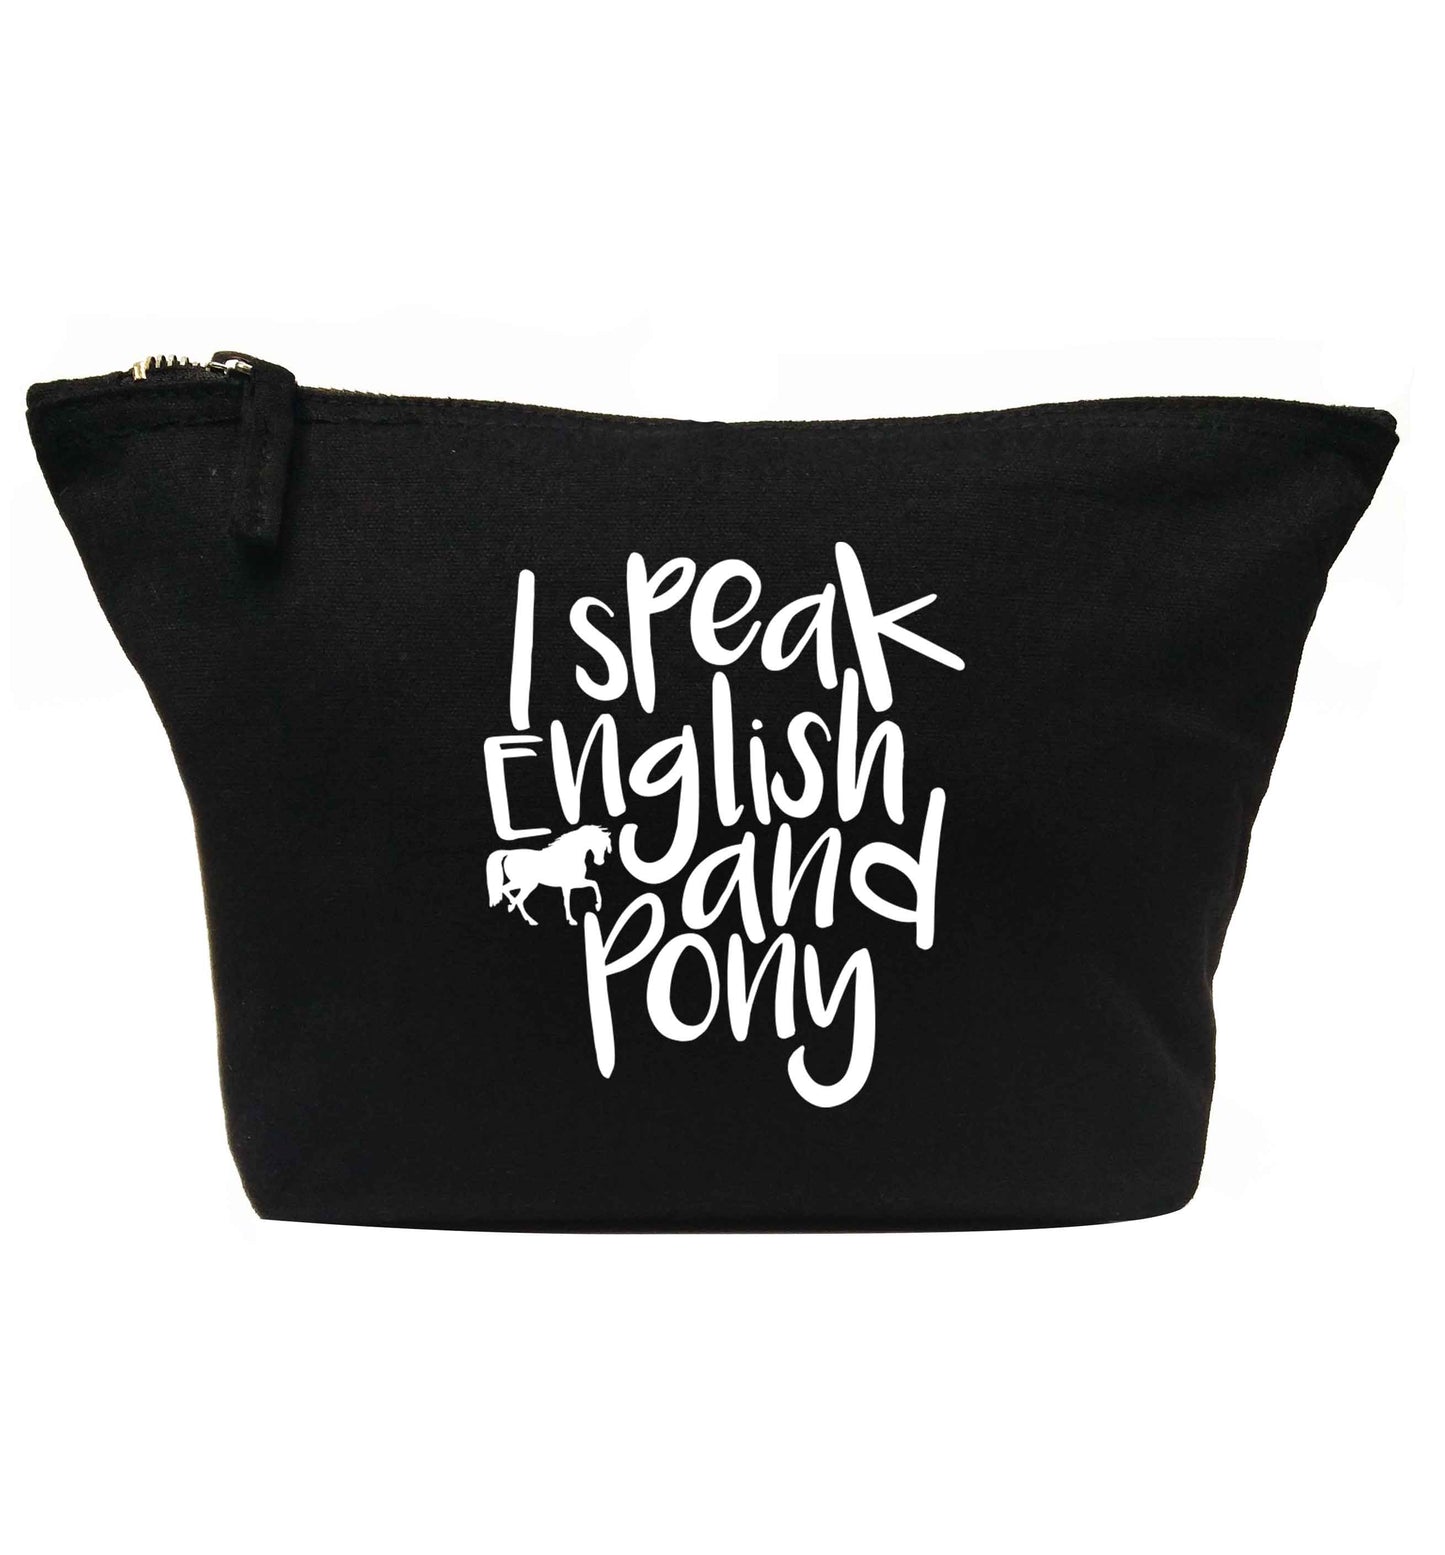 I speak English and pony | Makeup / wash bag